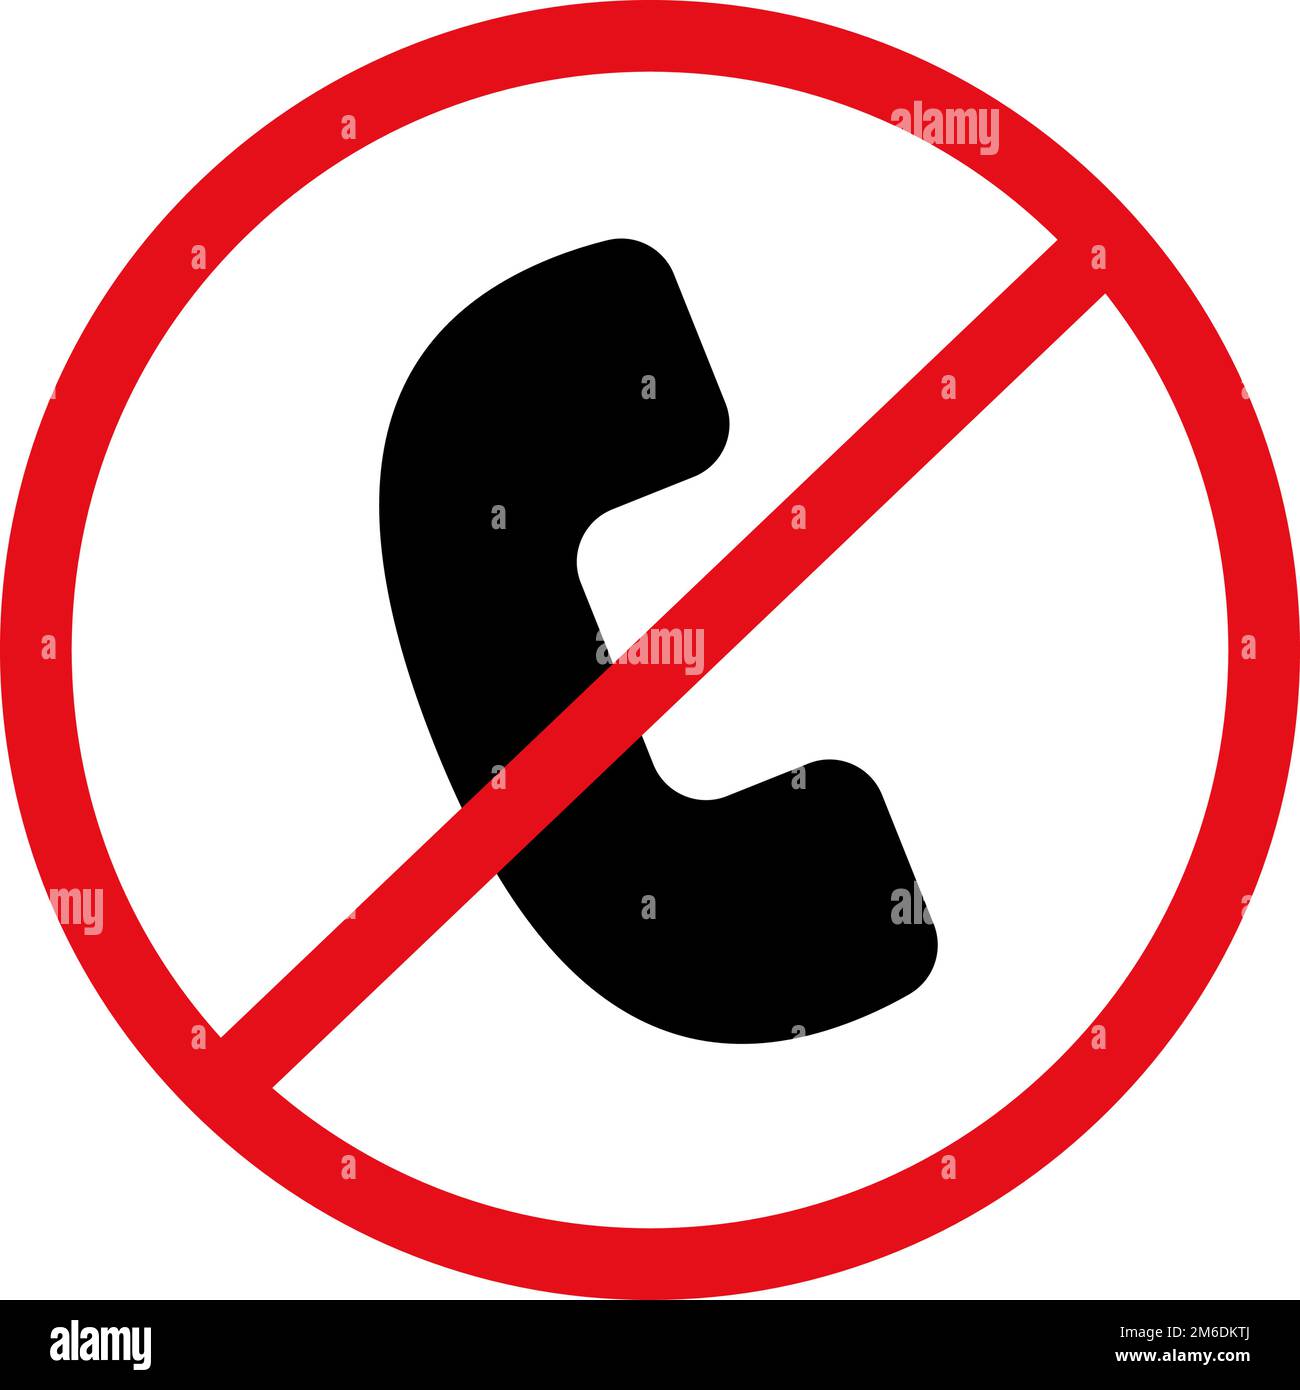 Do Not Call sign. Call restriction. Editable vector. Stock Vector